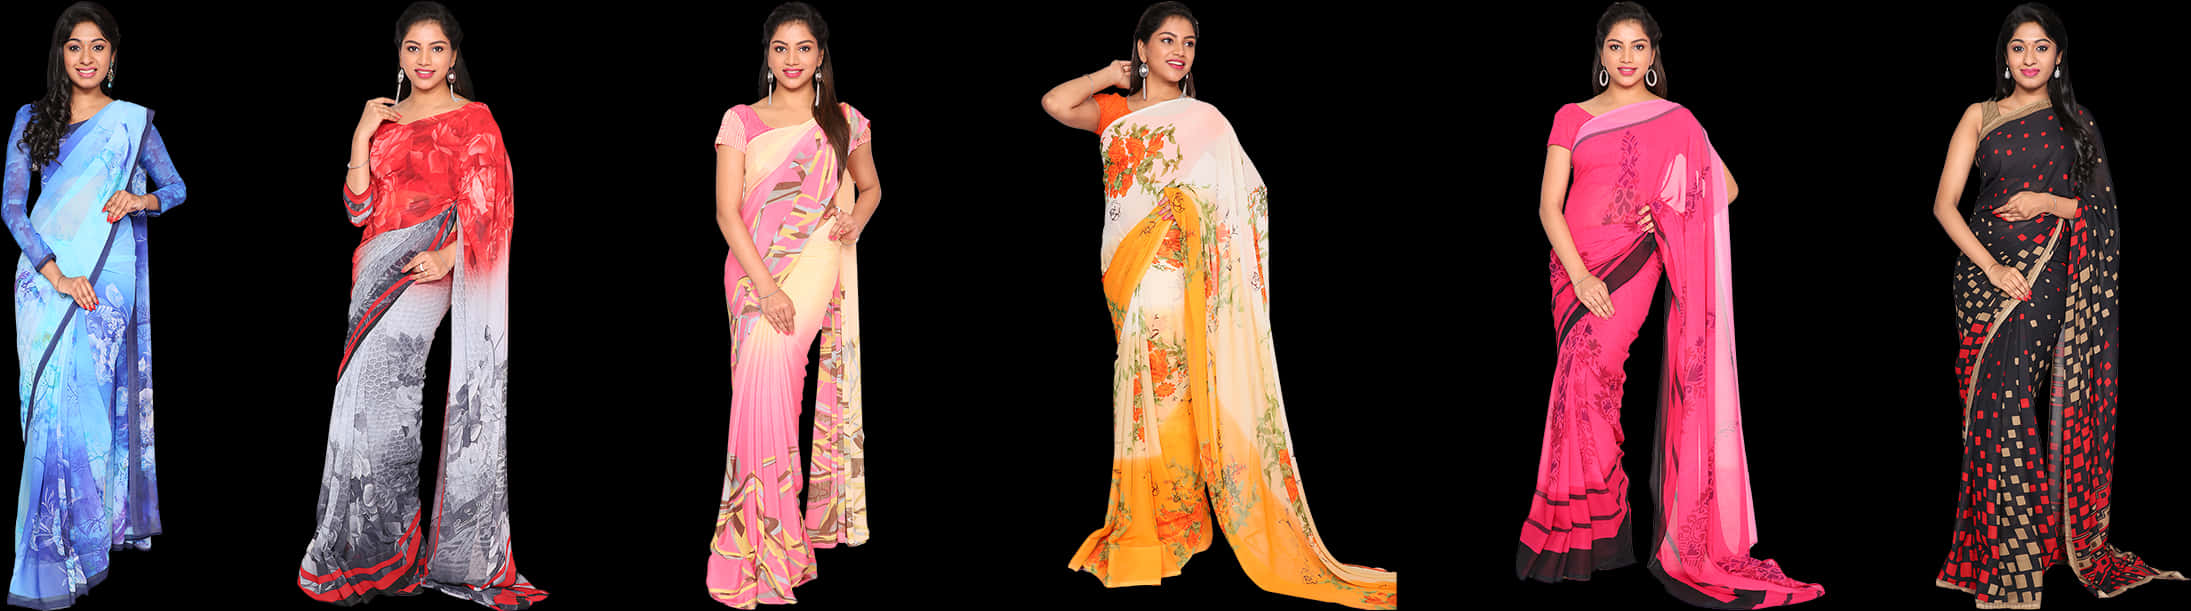 A Woman In A Sari